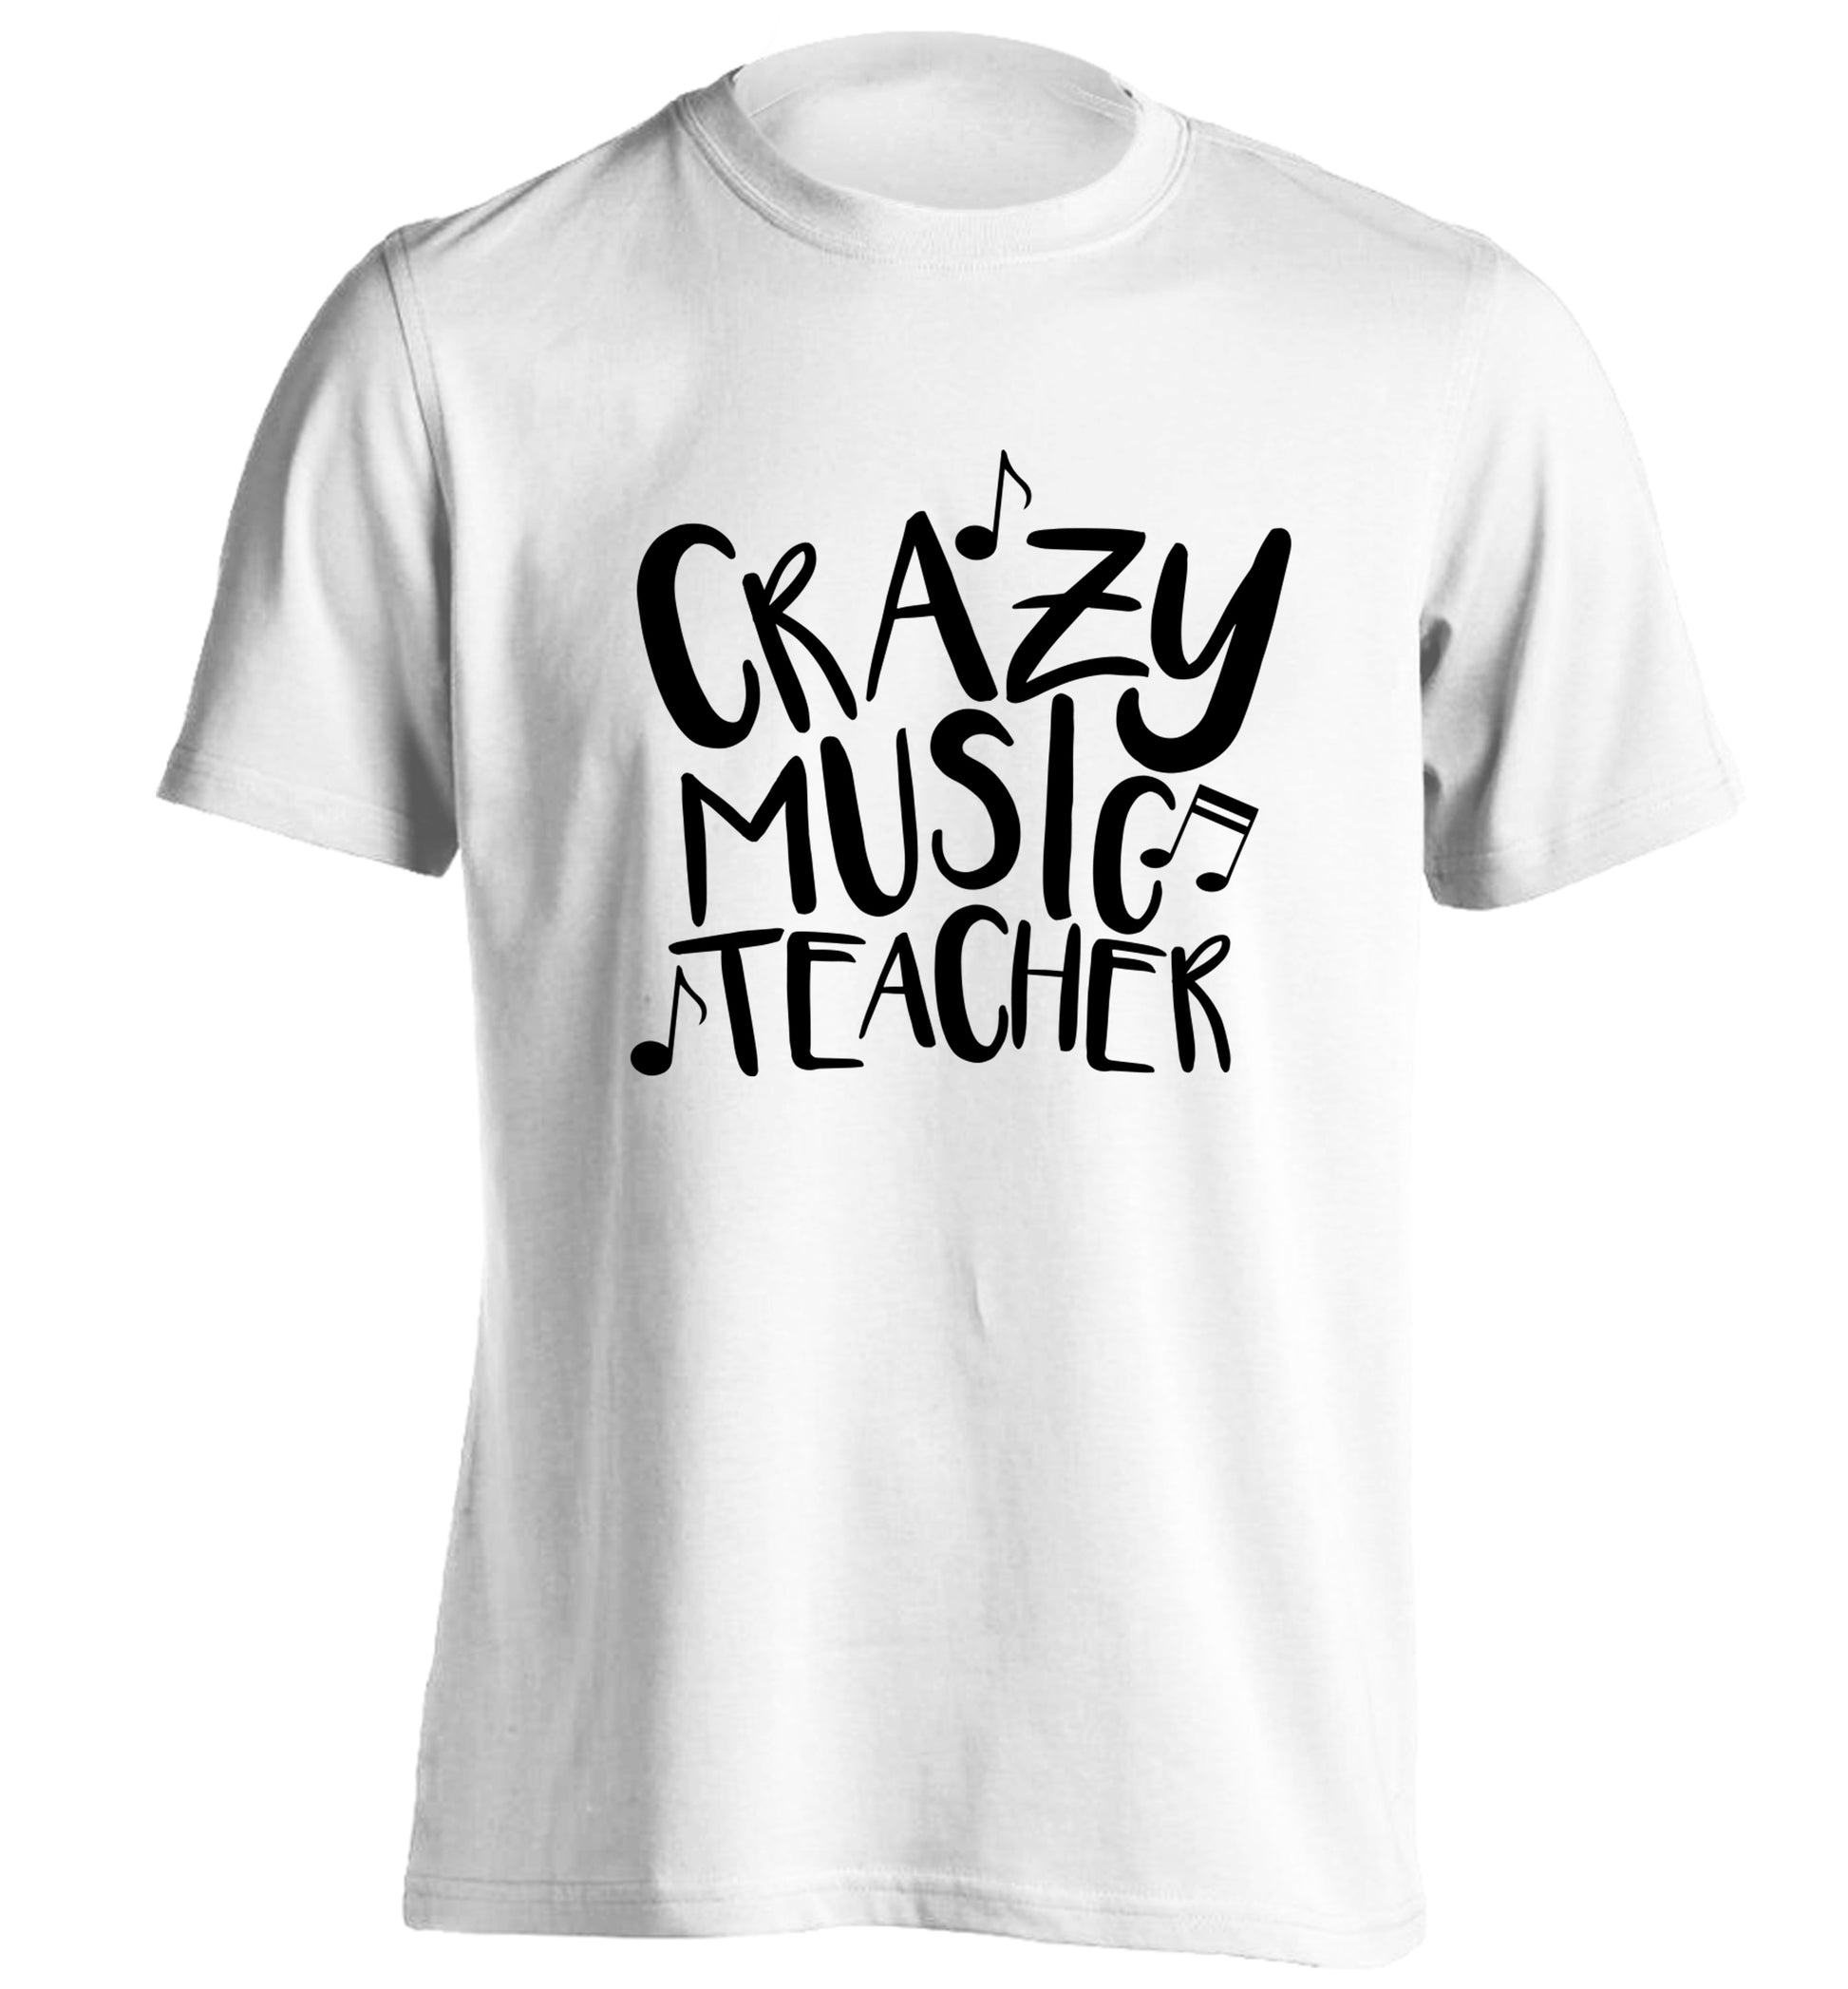 Crazy music teacher adults unisex white Tshirt 2XL